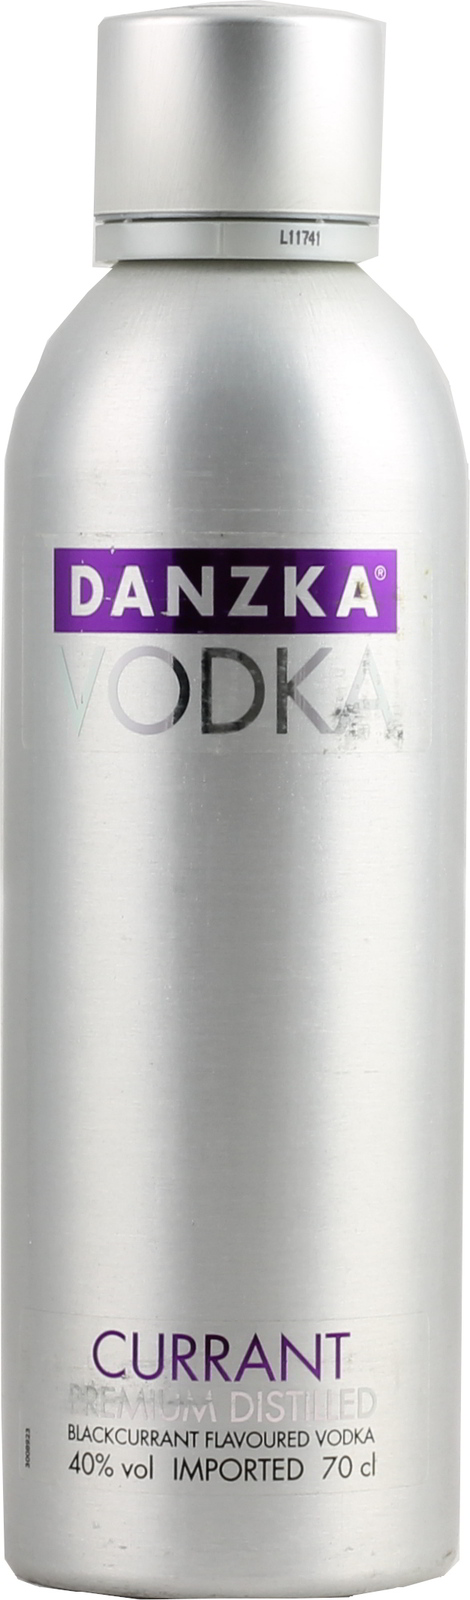 online Vodka Currant kaufen Danzka